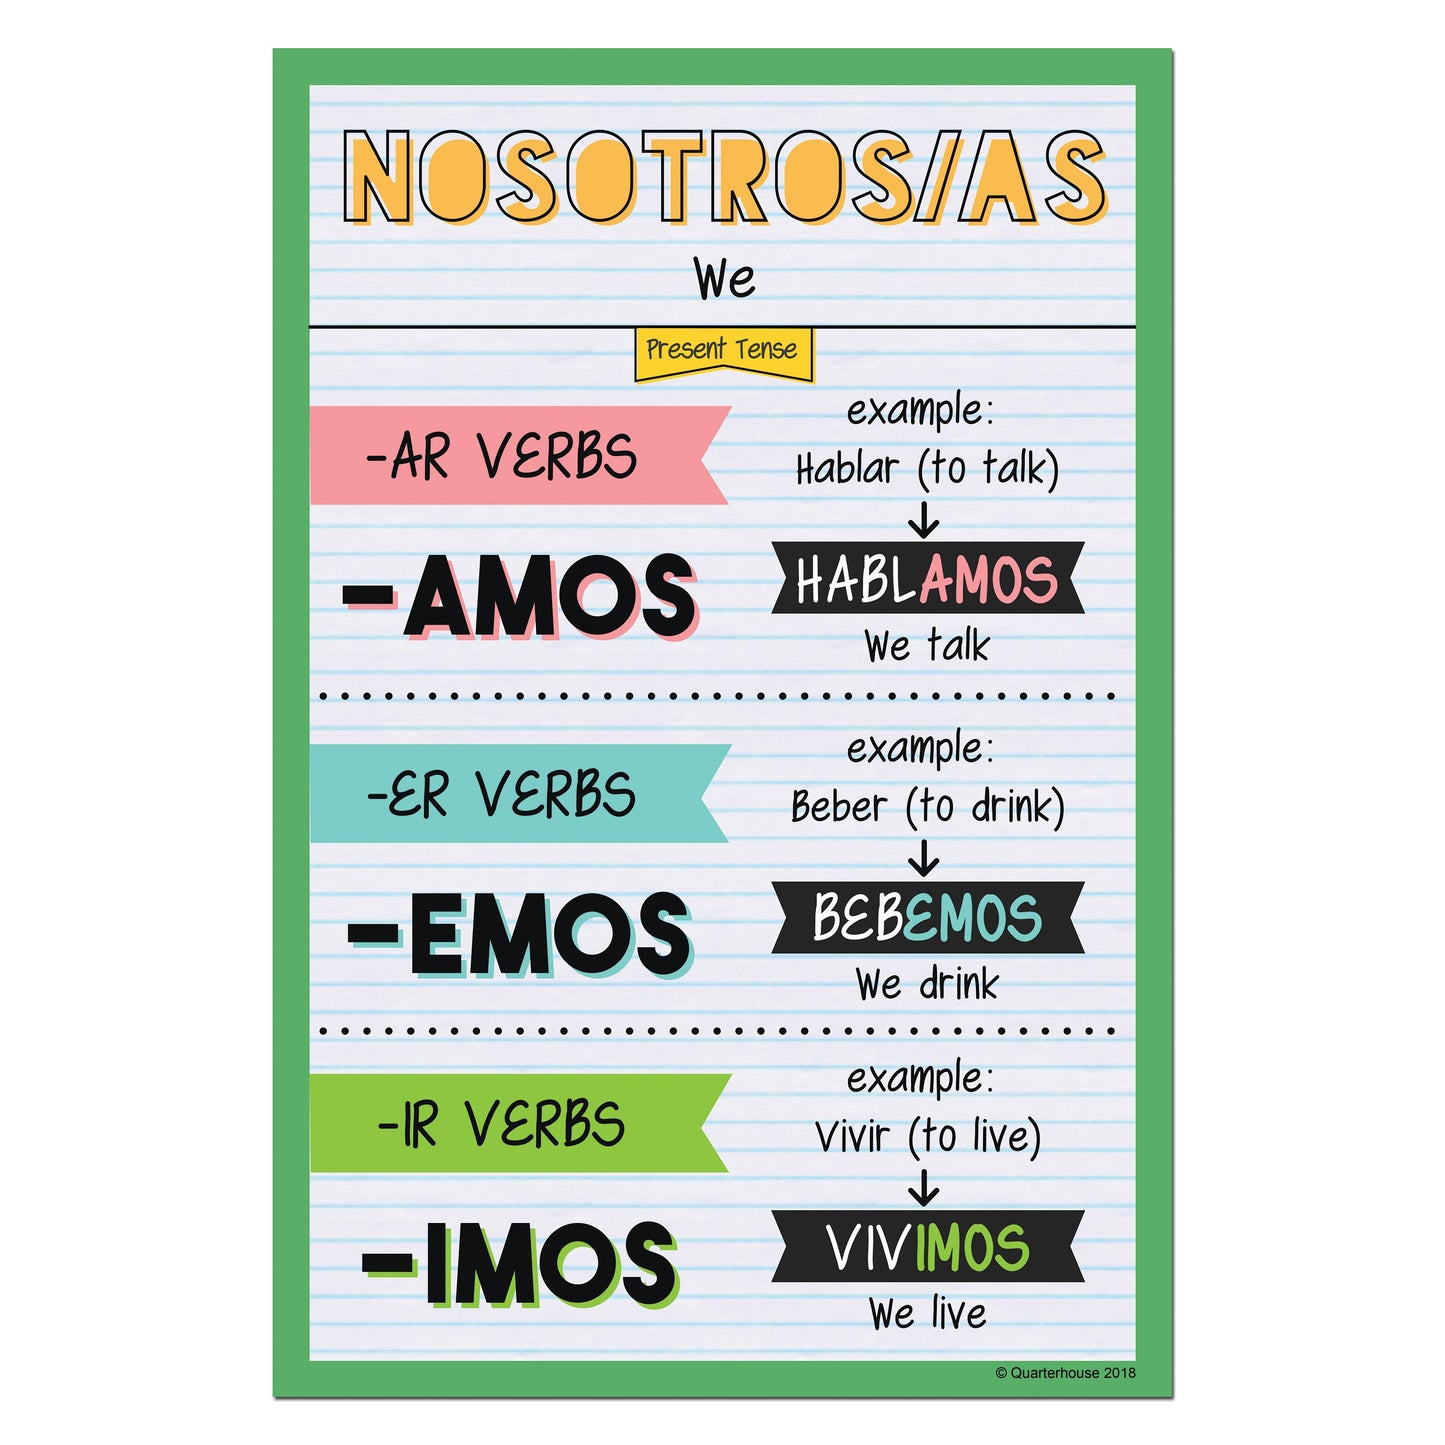 Quarterhouse Nosotros - Present Tense Spanish Verb Conjugation Poster, Spanish and ESL Classroom Materials for Teachers